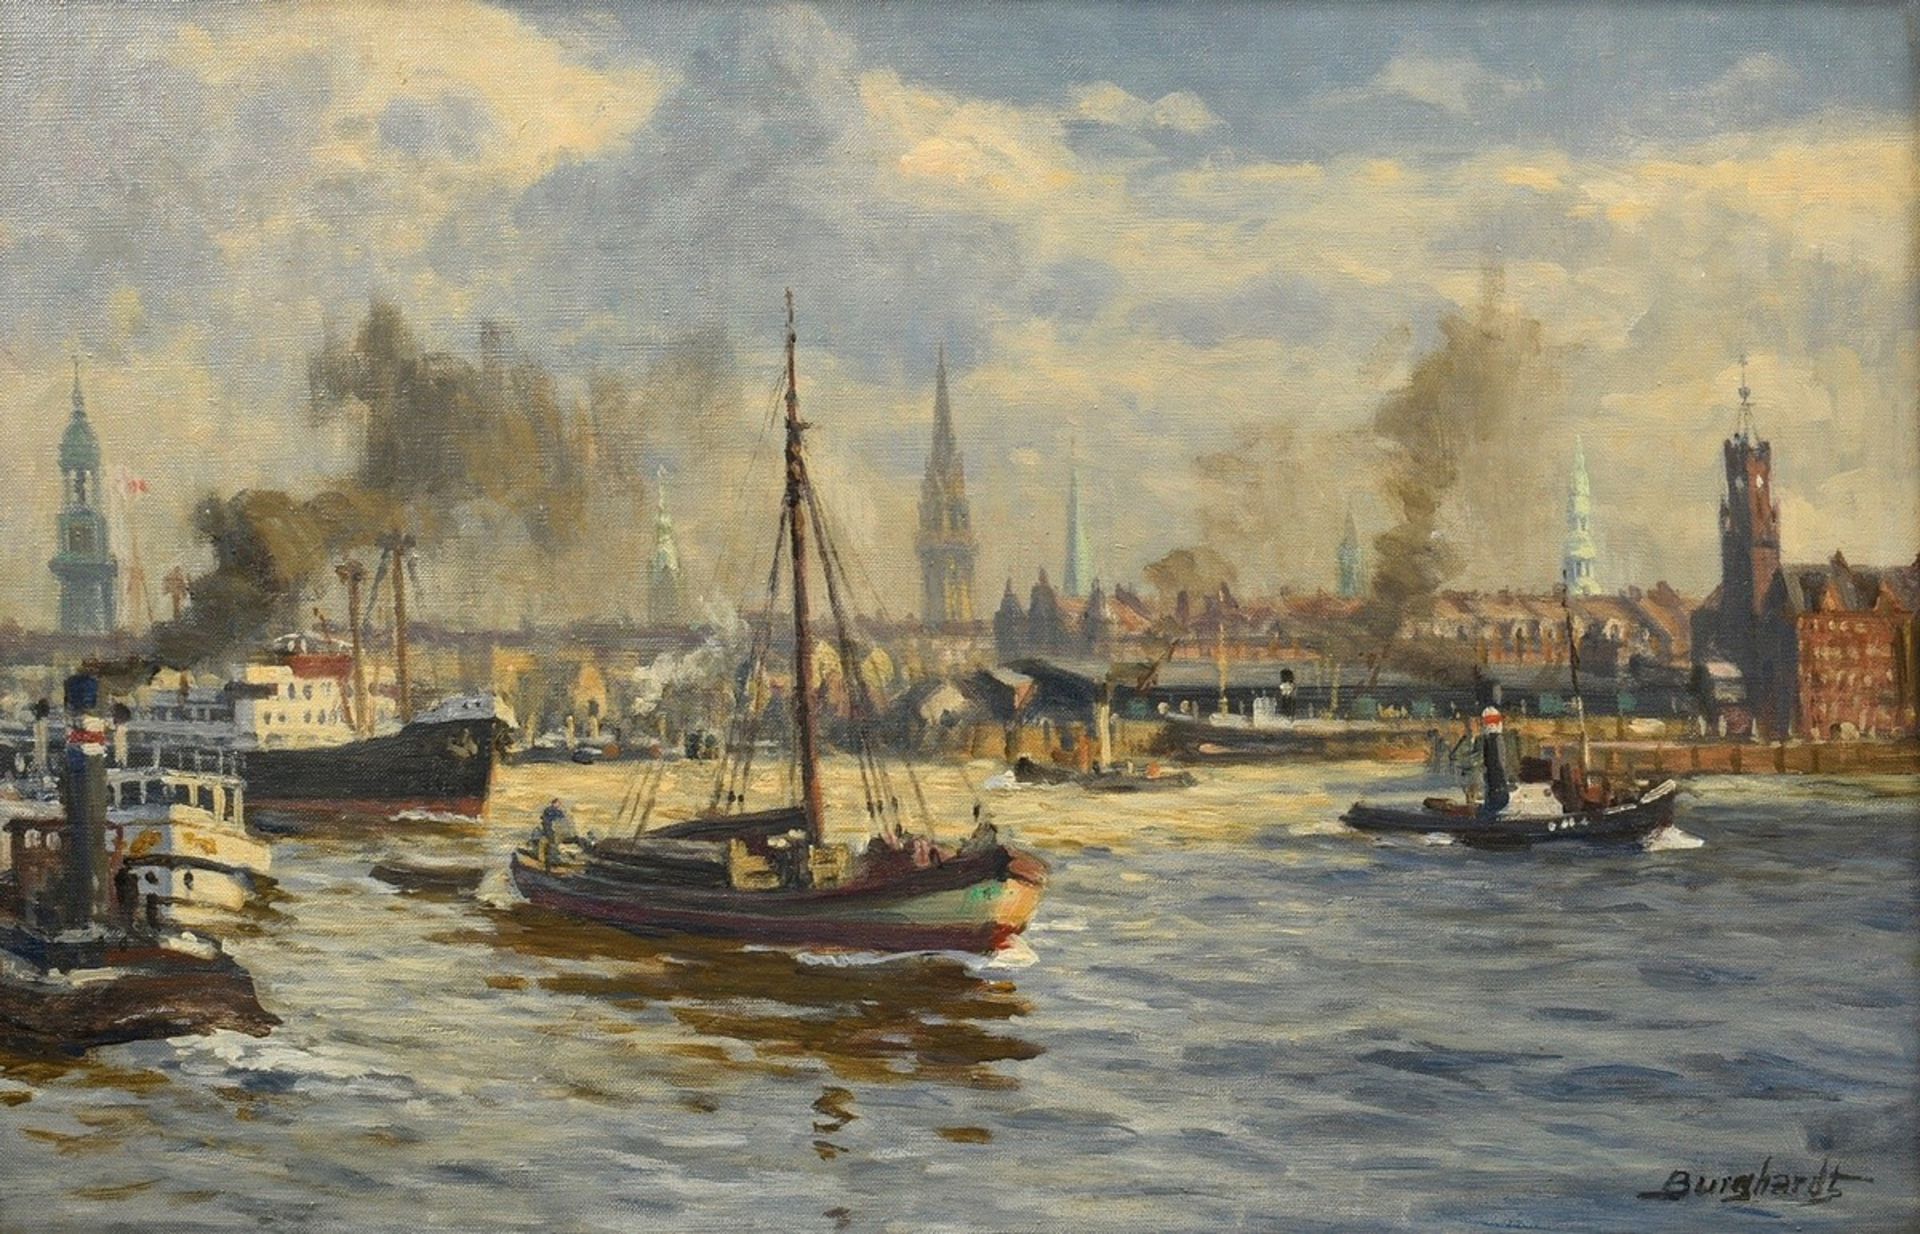 Burghardt, Gustav Paul (1875-1955) "Hamburg harbor with ship traffic and skyline", oil/canvas, b.r.